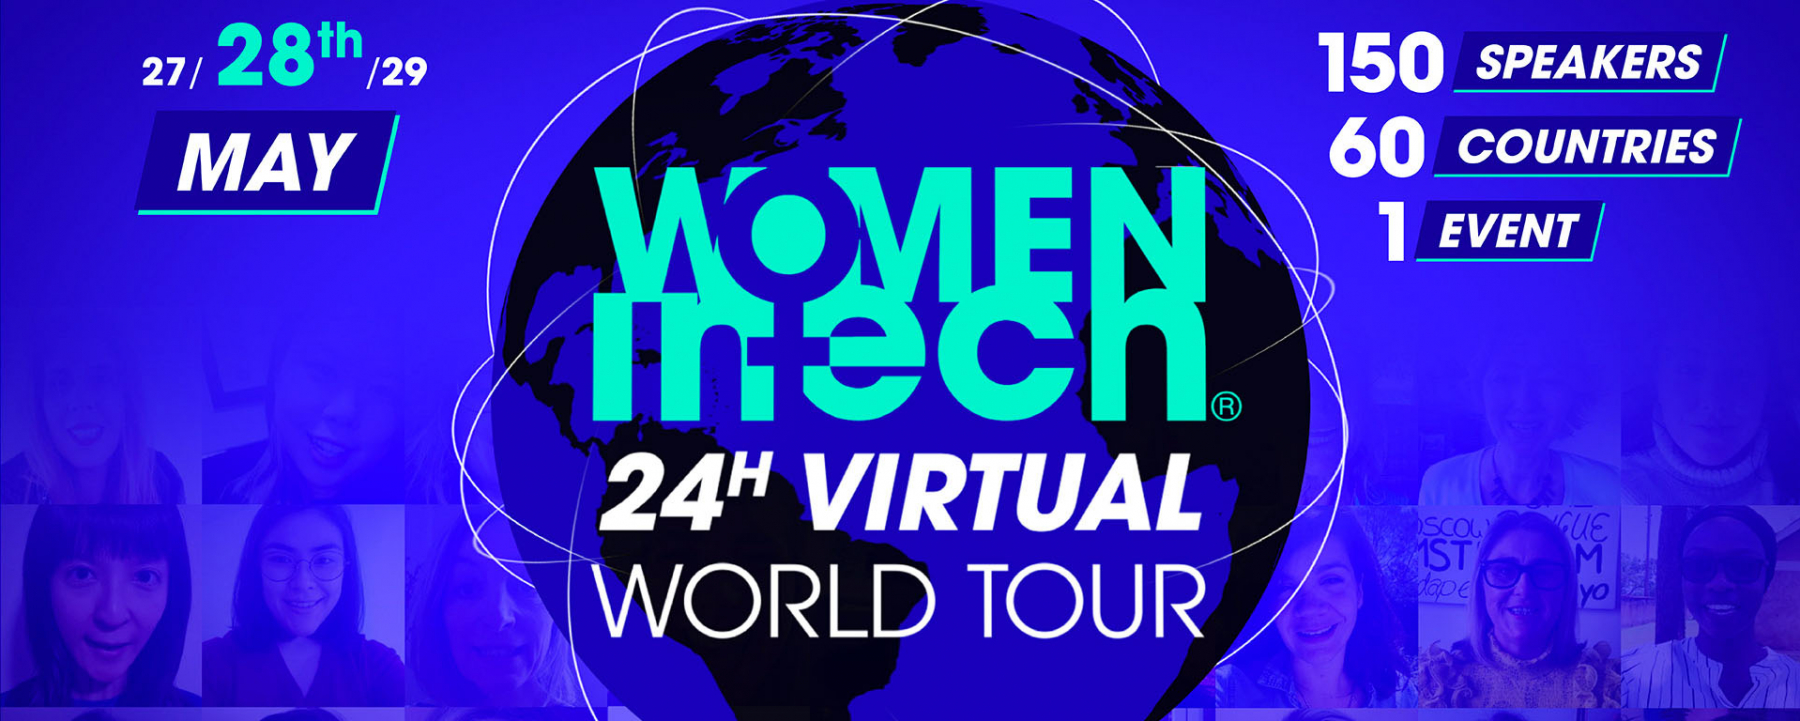 Webinar Women in tech - 24h virtual world tour, du 28 au 29 mai 2020